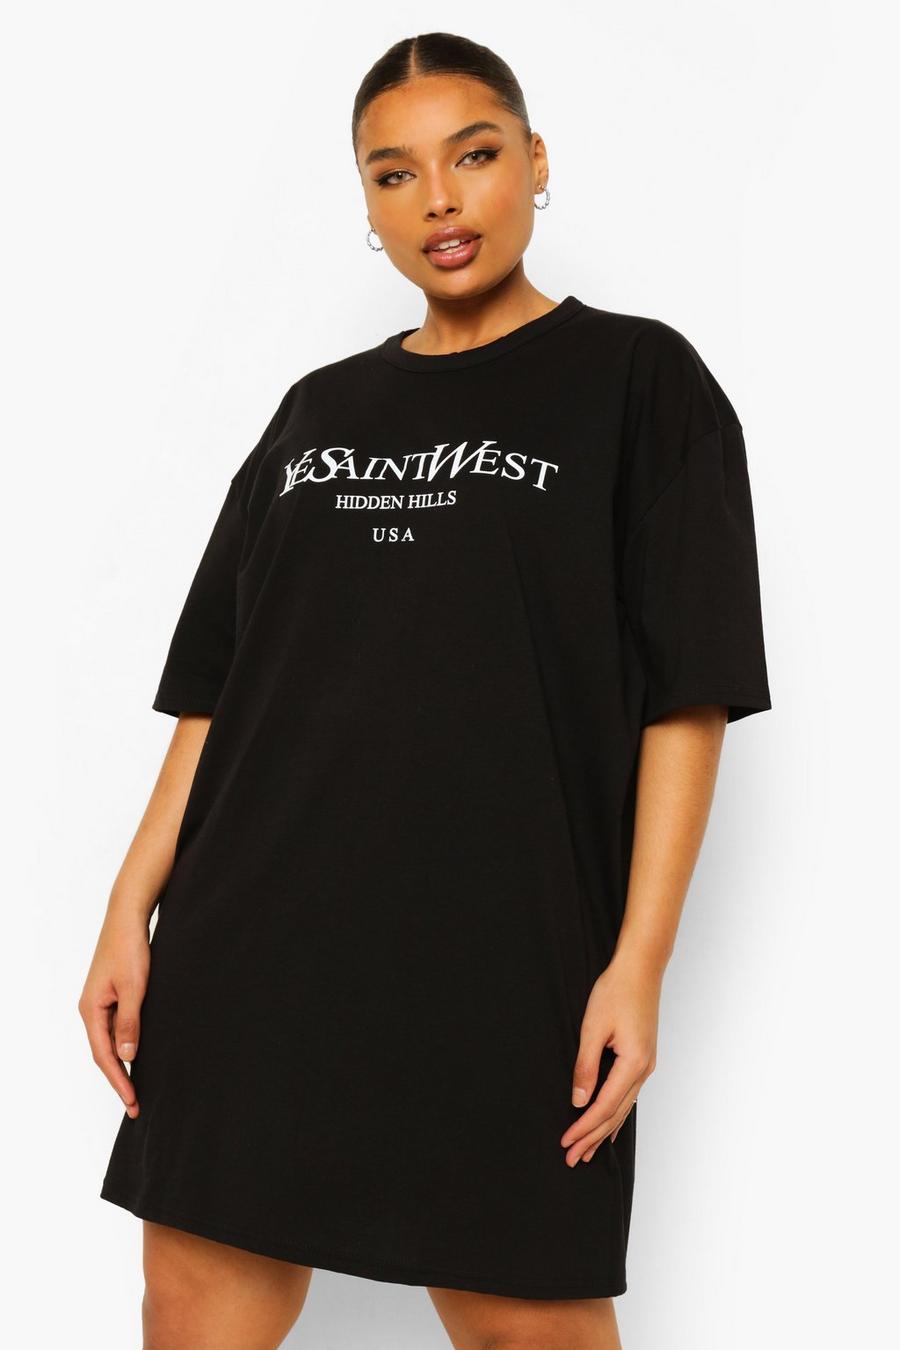 Grande taille - Robe t-shirt Ye Saint West, Black